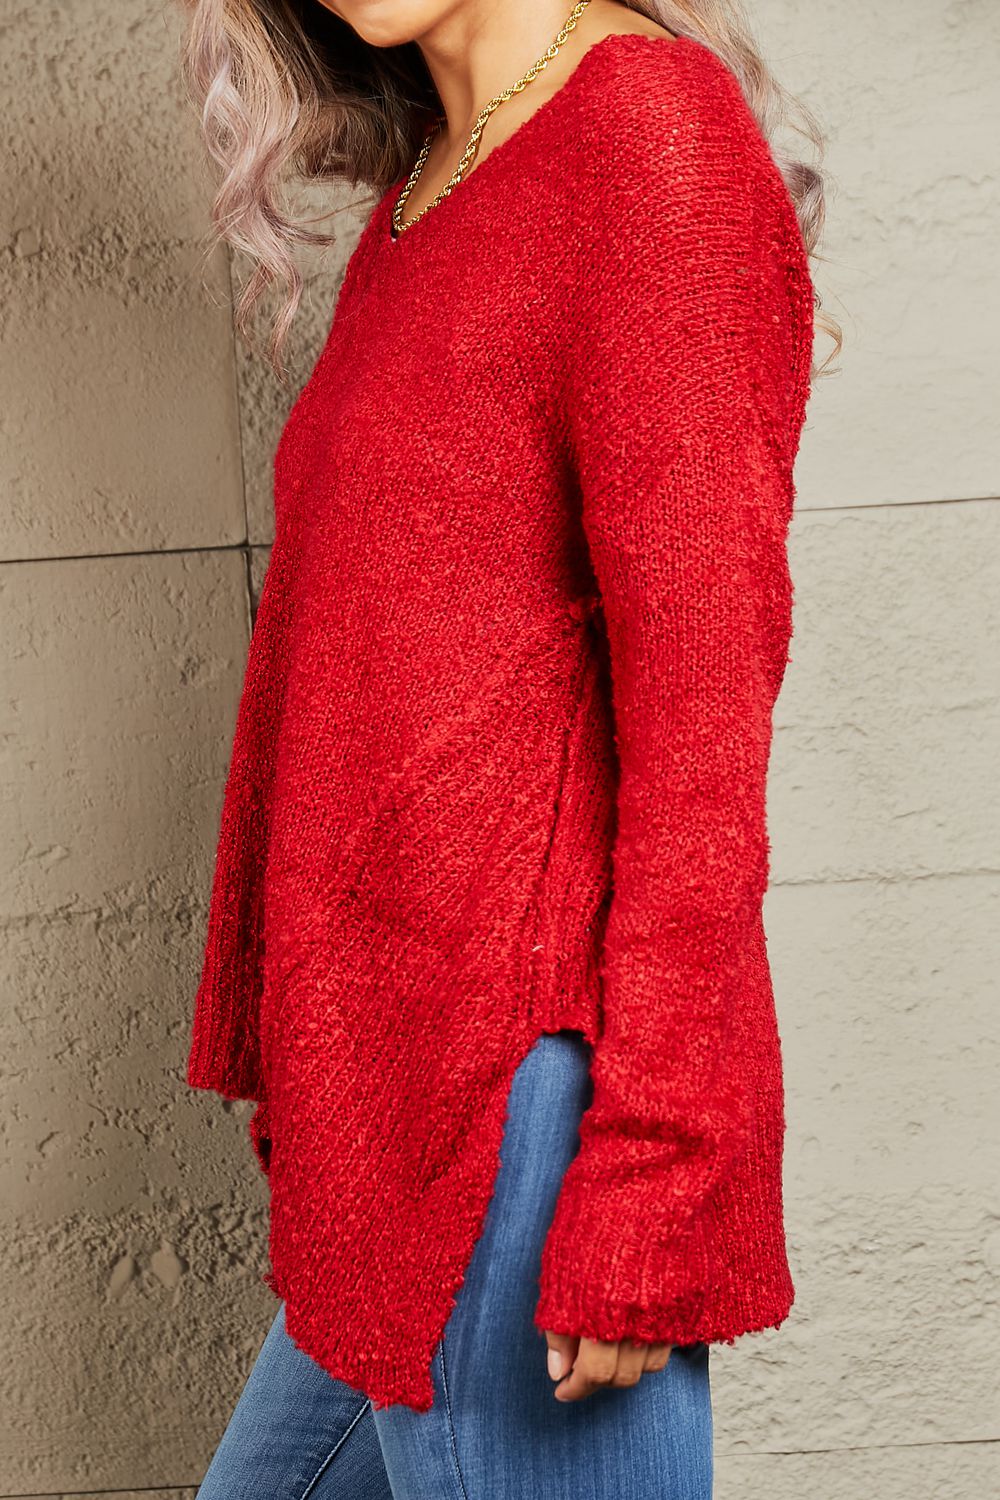 Draped Detail Knit Sweater in RedSweaterHeimish